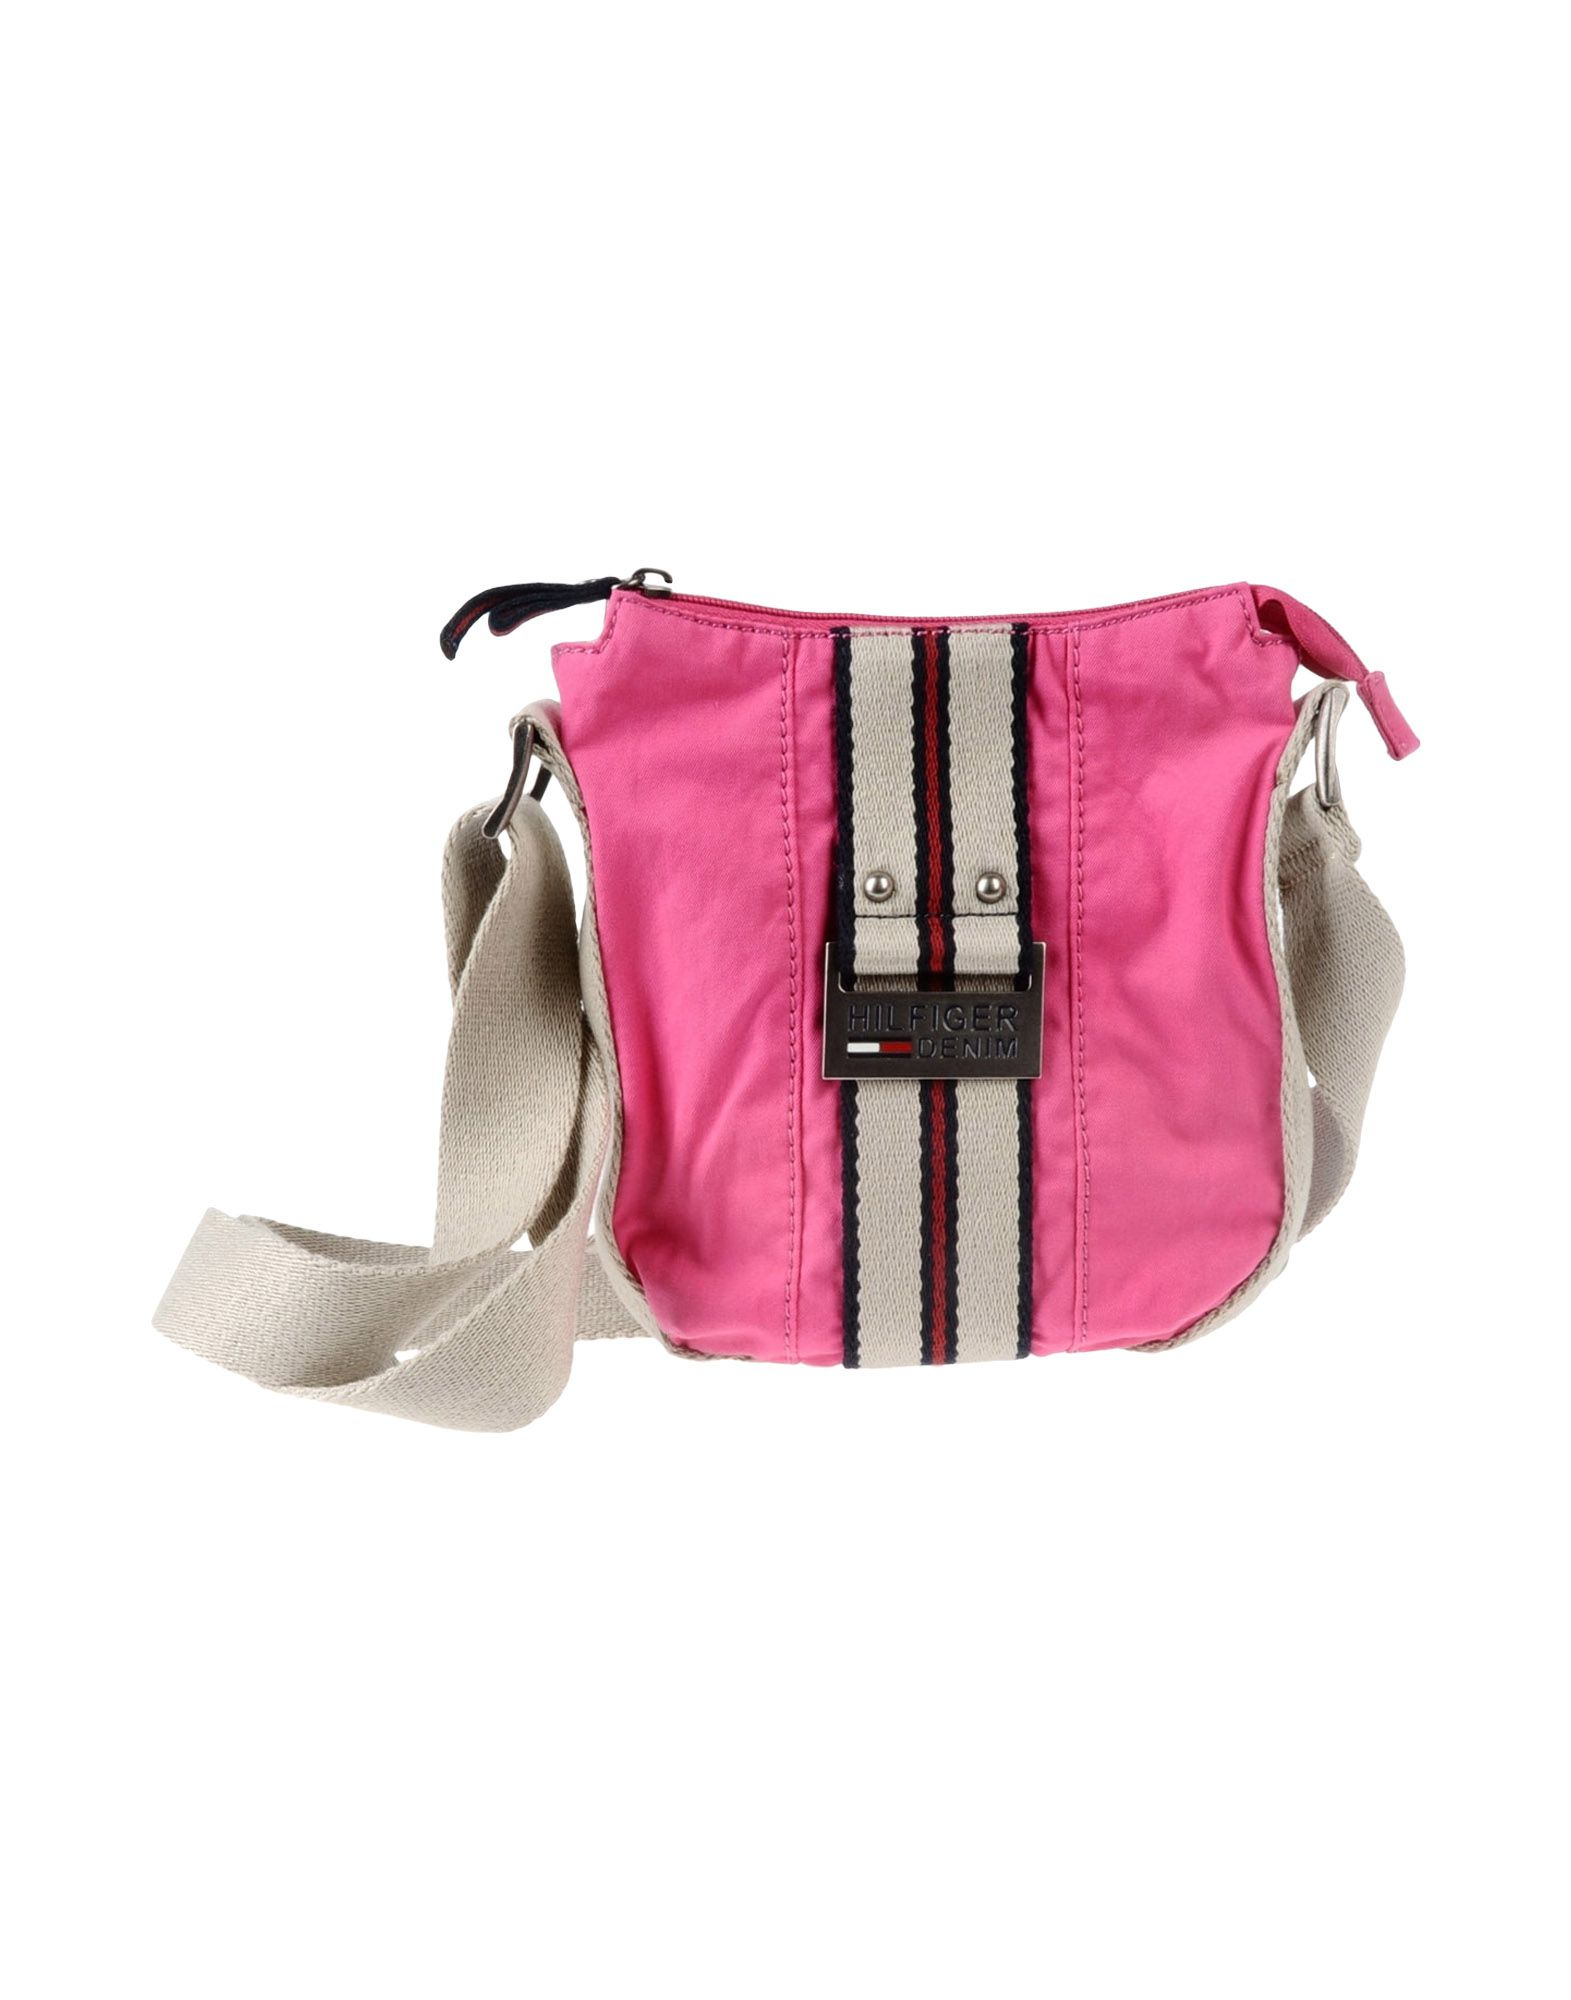 Tommy Hilfiger Denim Small Leather Bag in Pink (Fuchsia) | Lyst